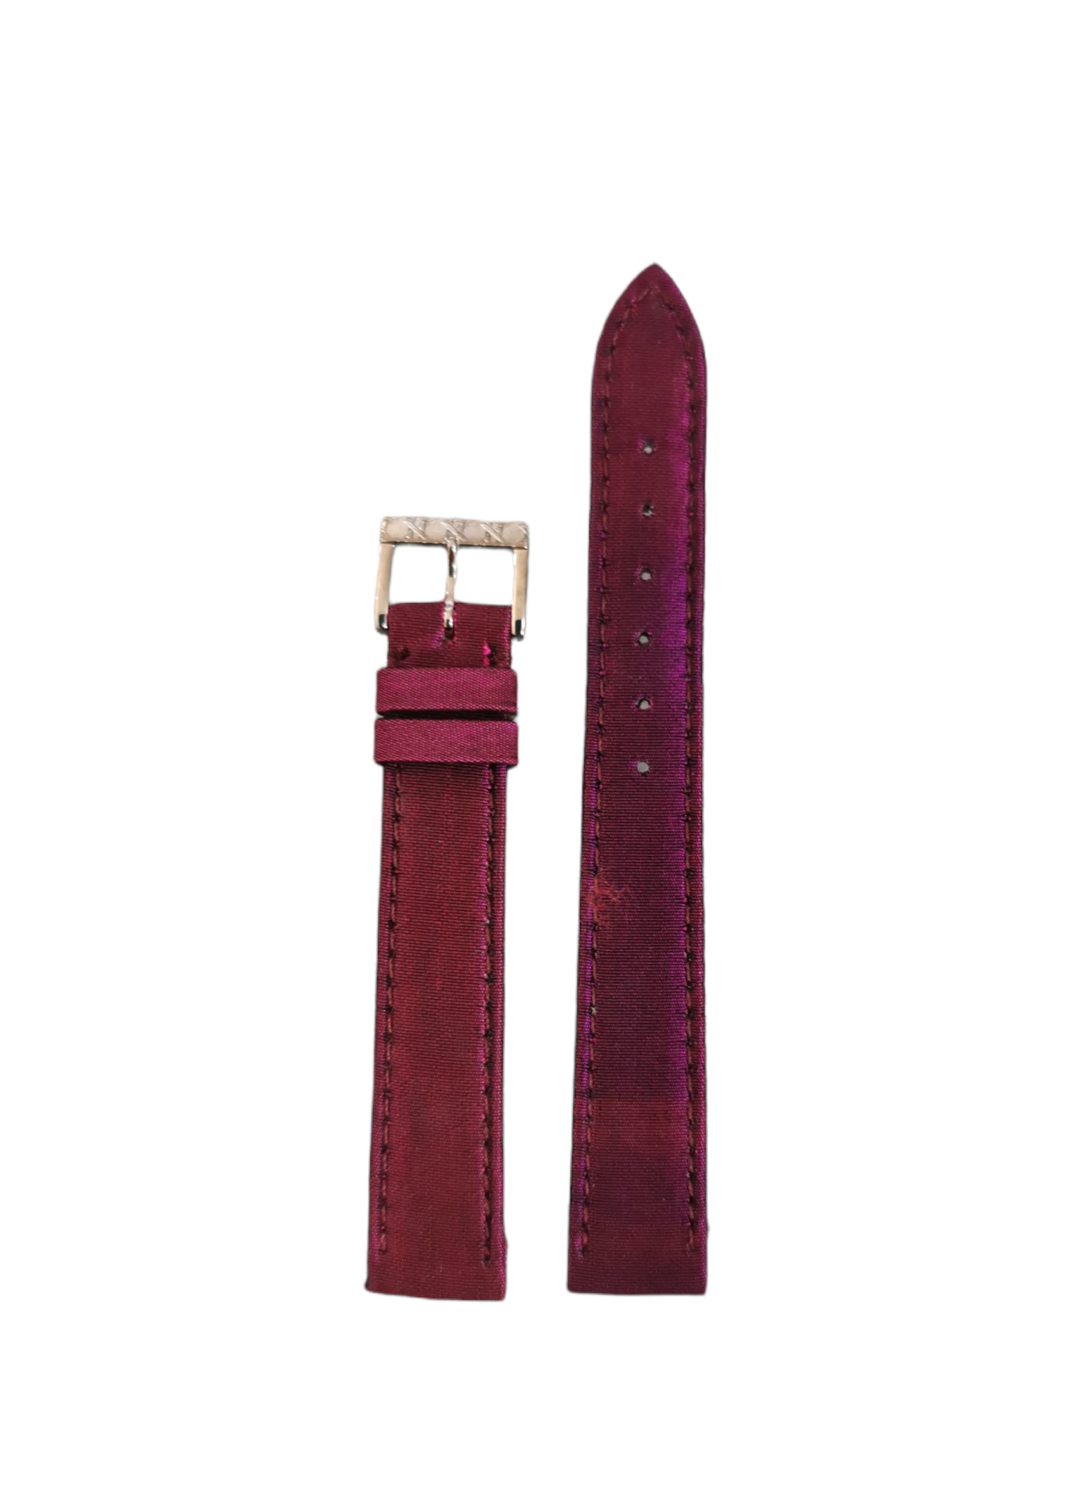 Original Dior Seide Uhrenband, Dunkelviolett, 14 mm Breite